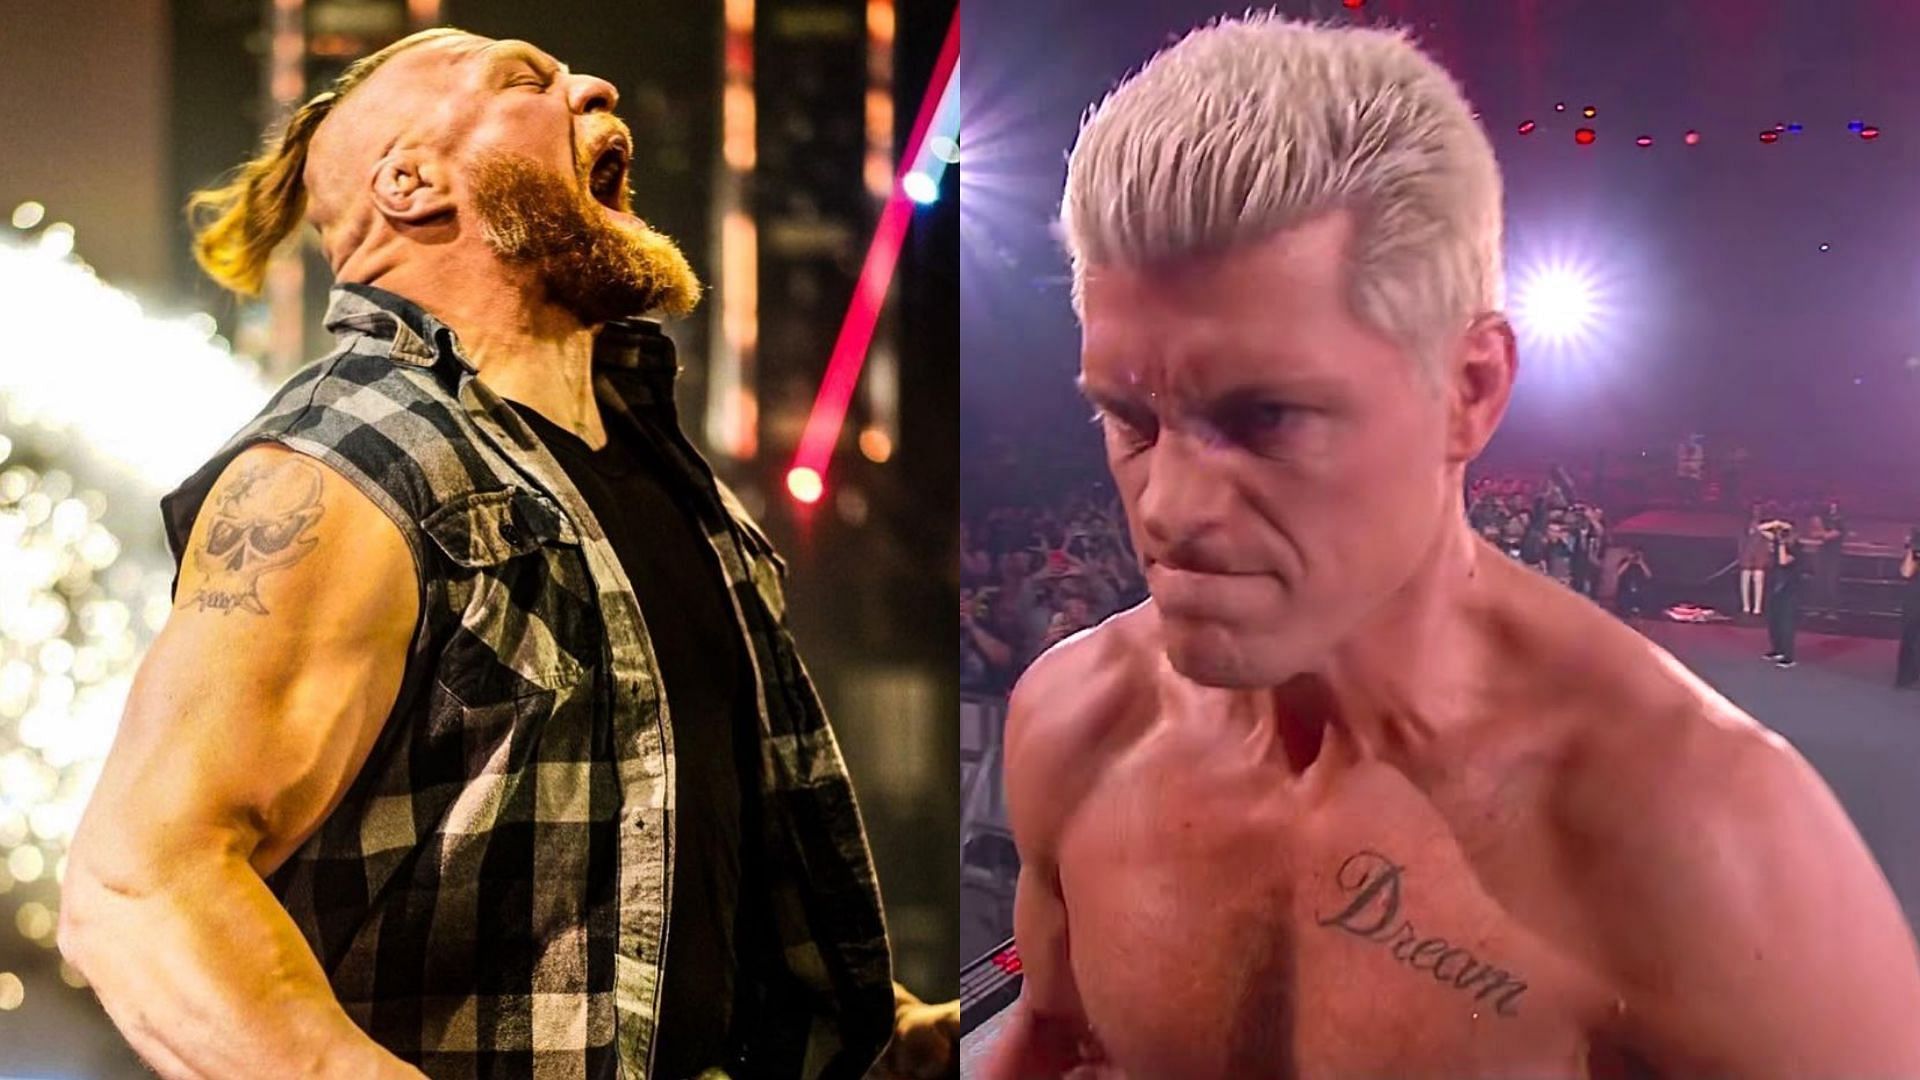 Brock Lesnar vs. Cody Rhodes might be WWE